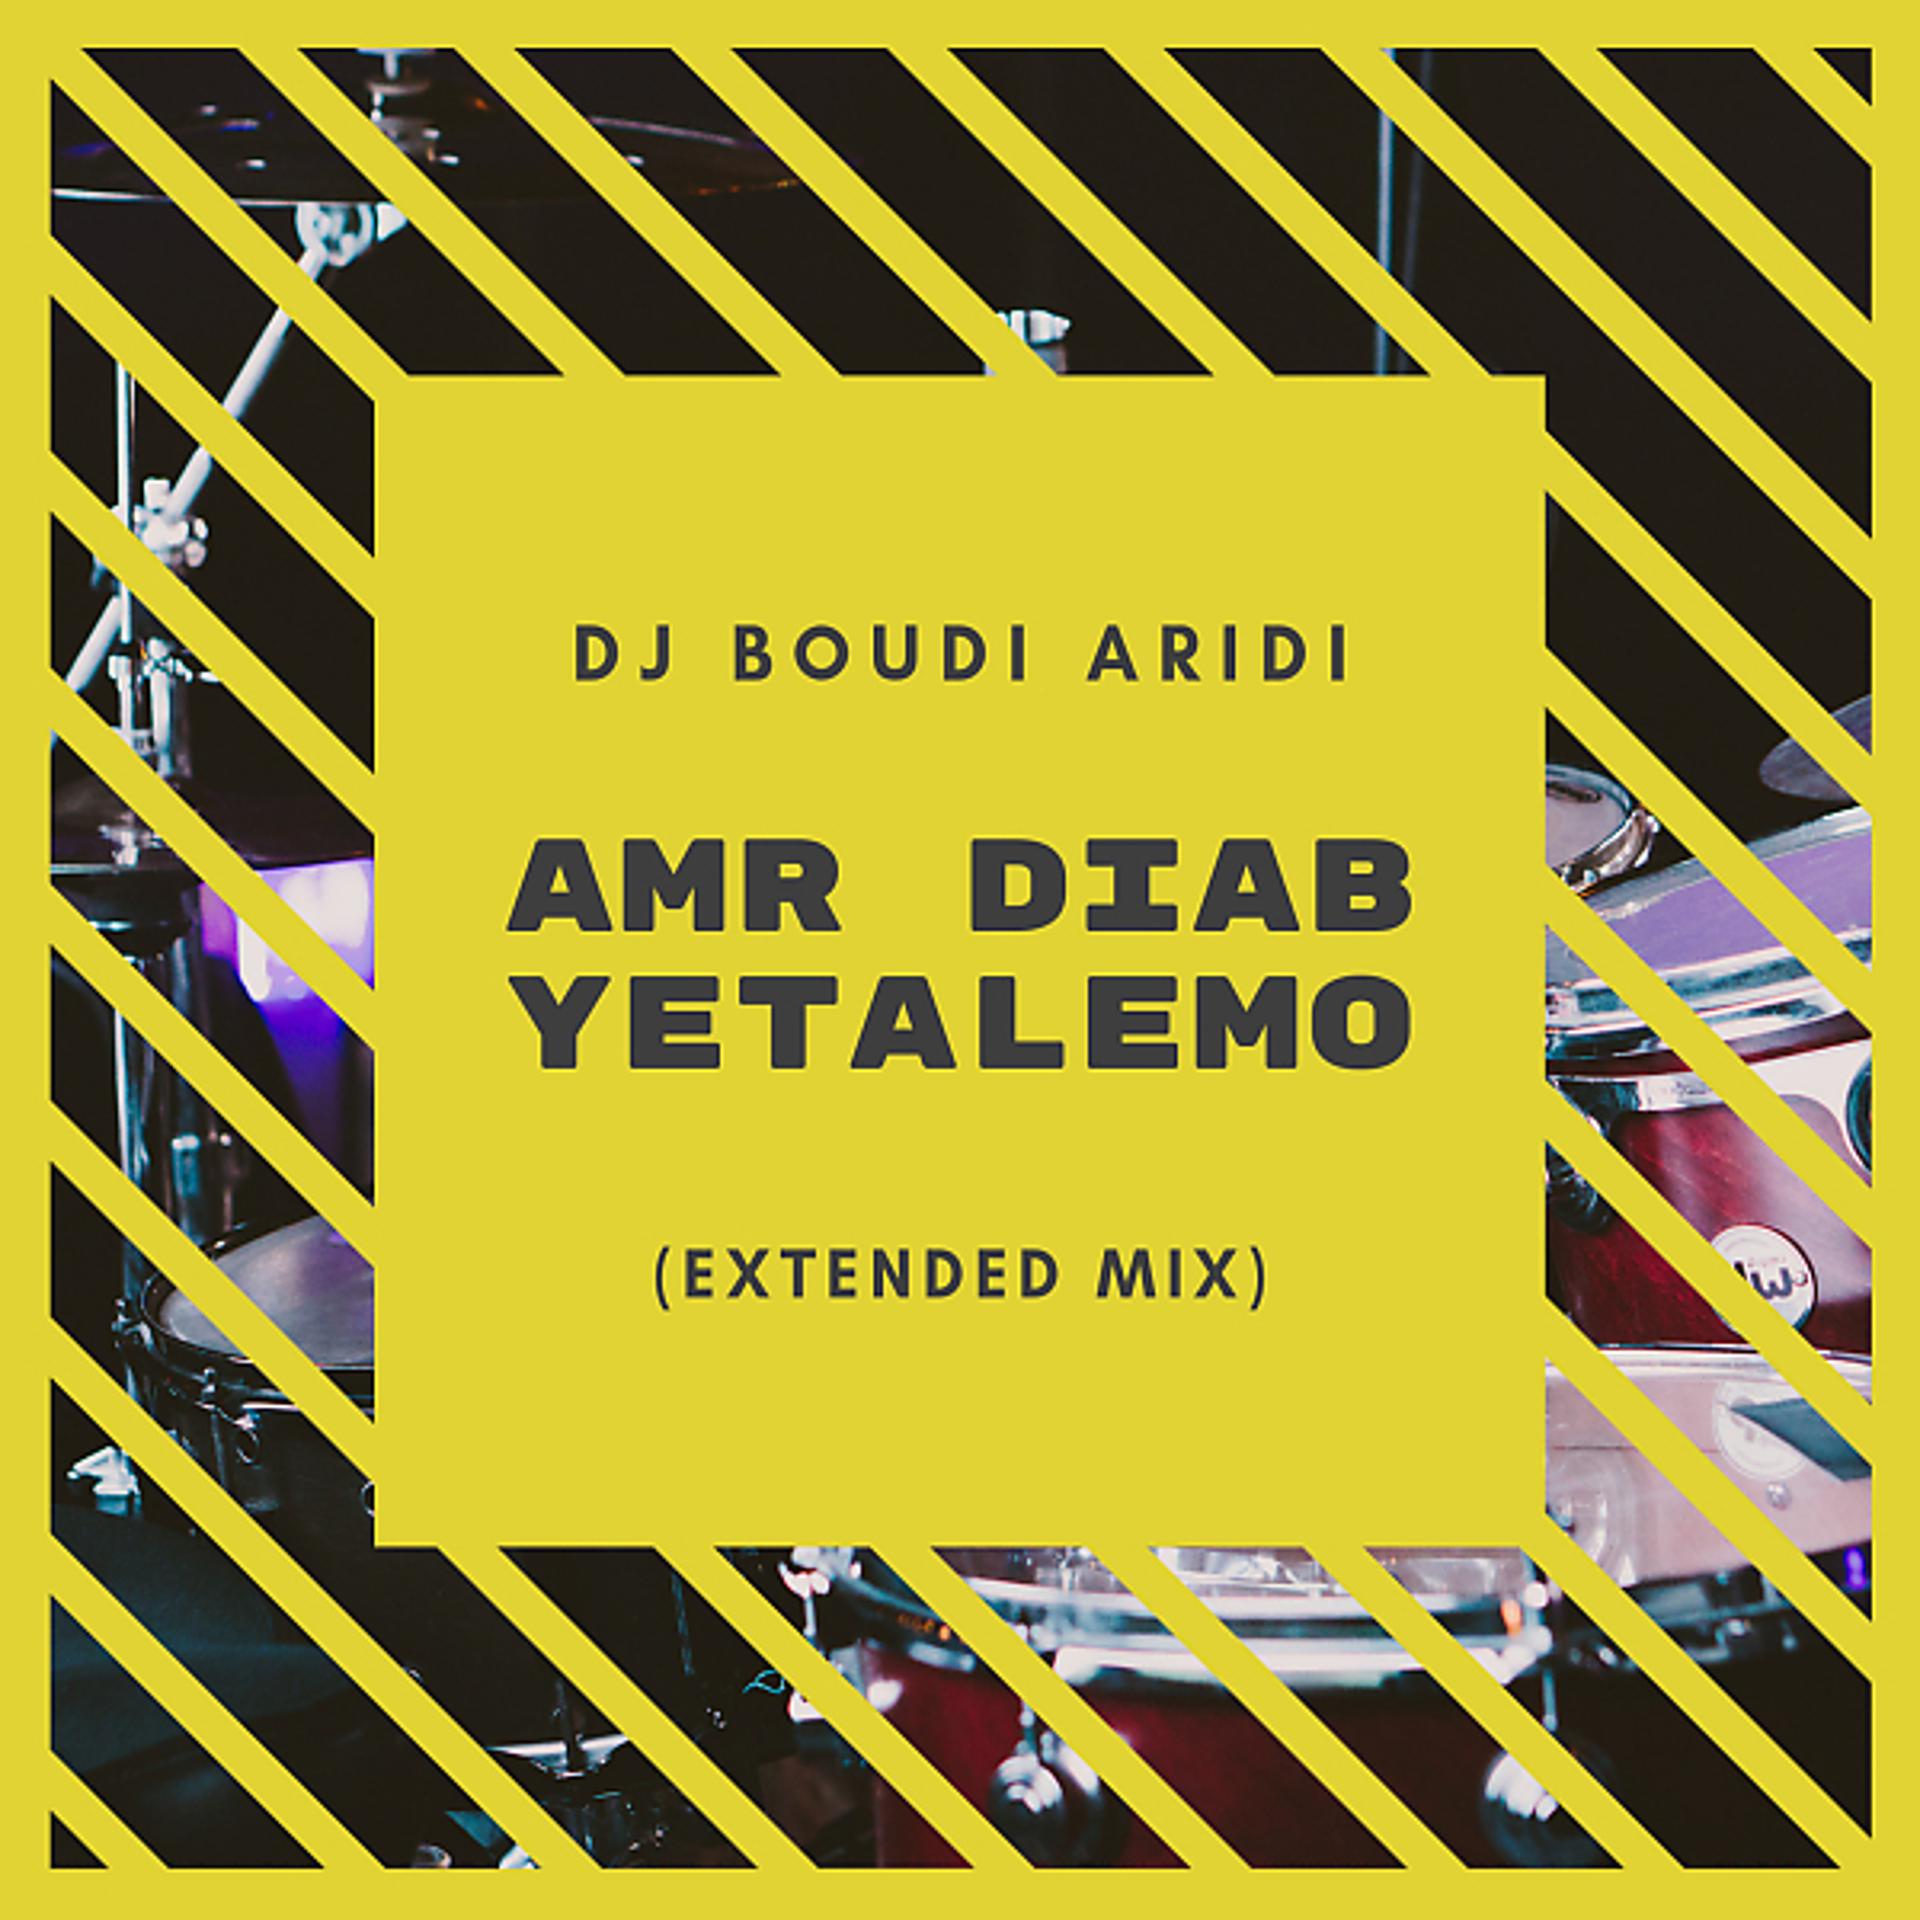 Постер к треку Boudi Aridi - Yetalemo - Amr Diab (Extended Mix)